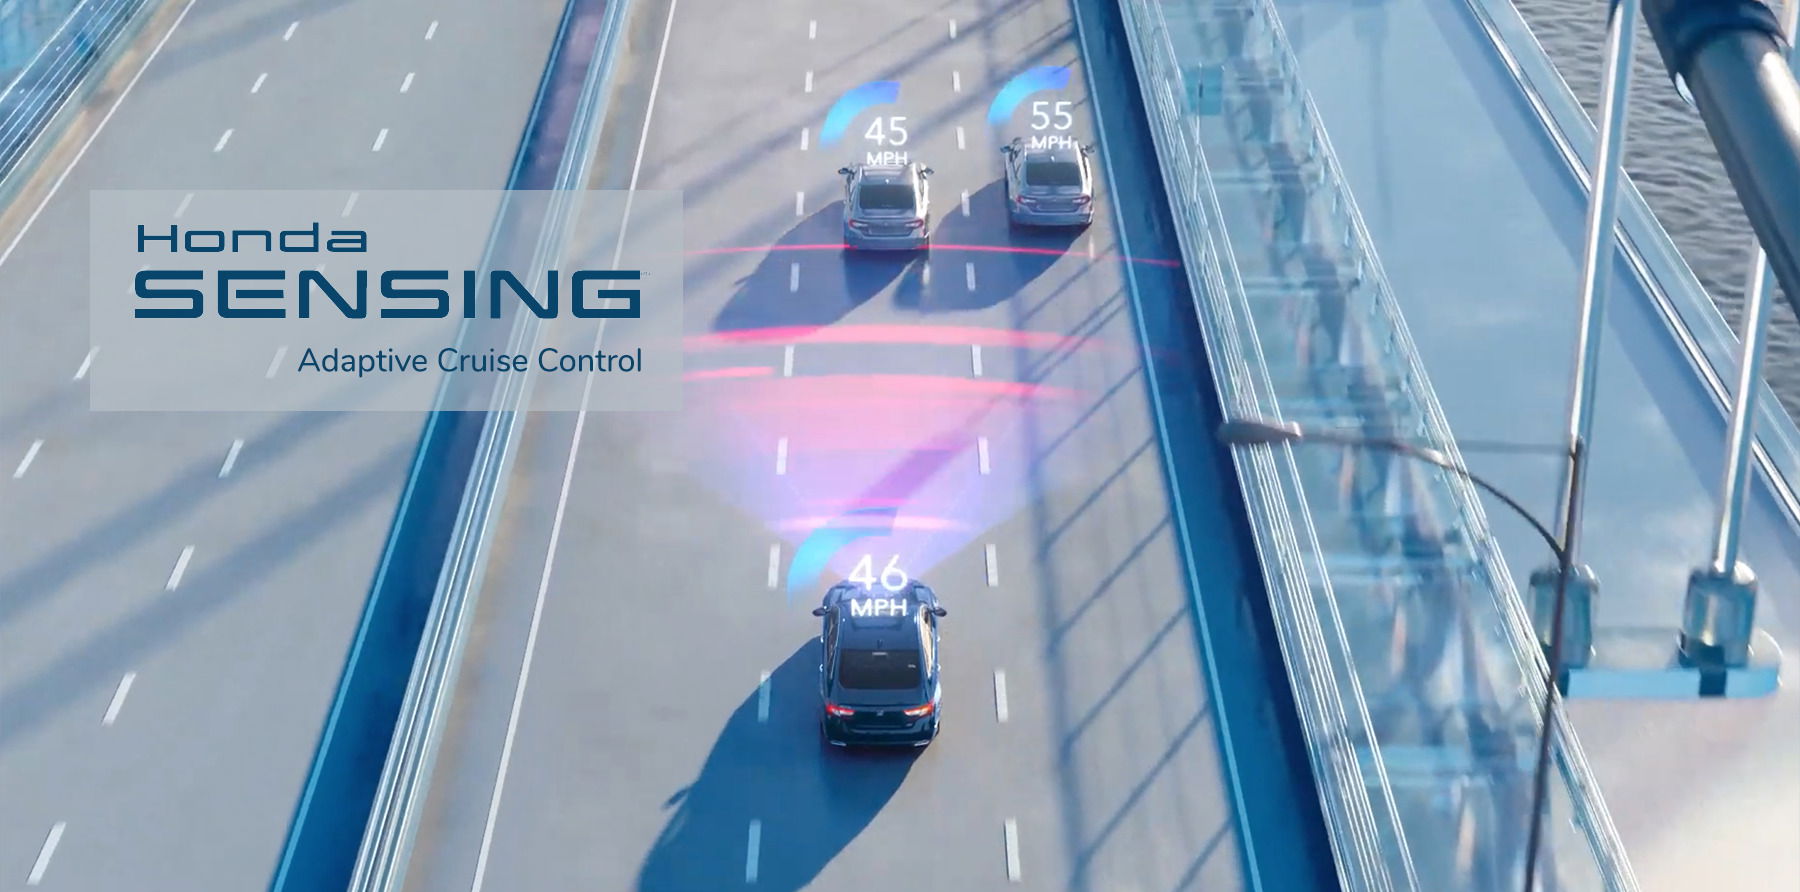 Honda Sensing adaptive cruise control following distance issues via Verne Eide Honda.